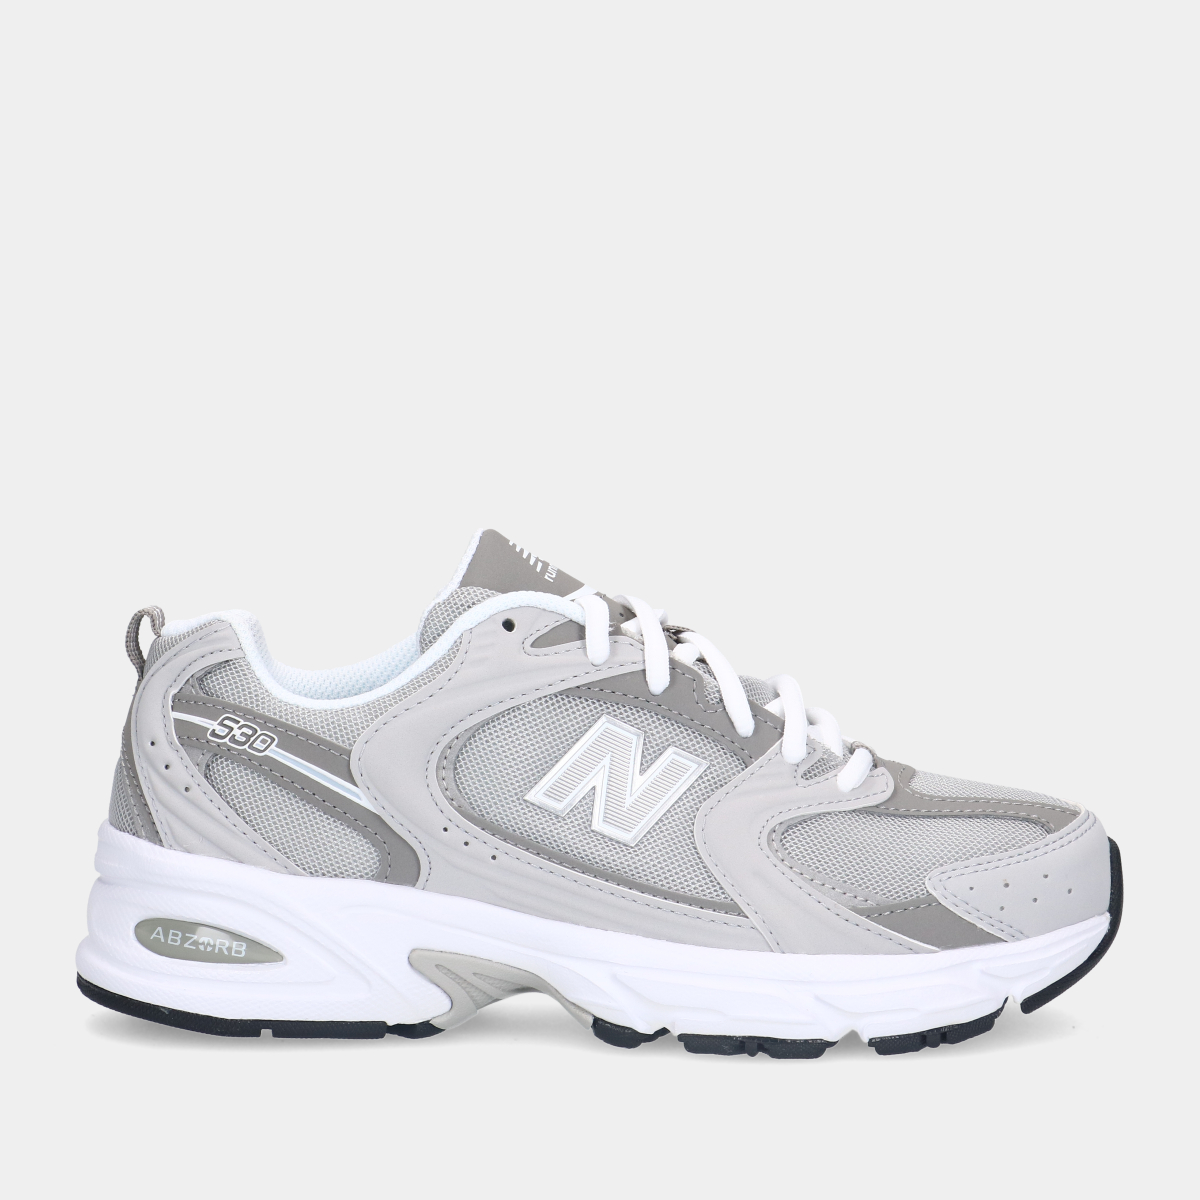 New Balance 530 Grey sneakers
